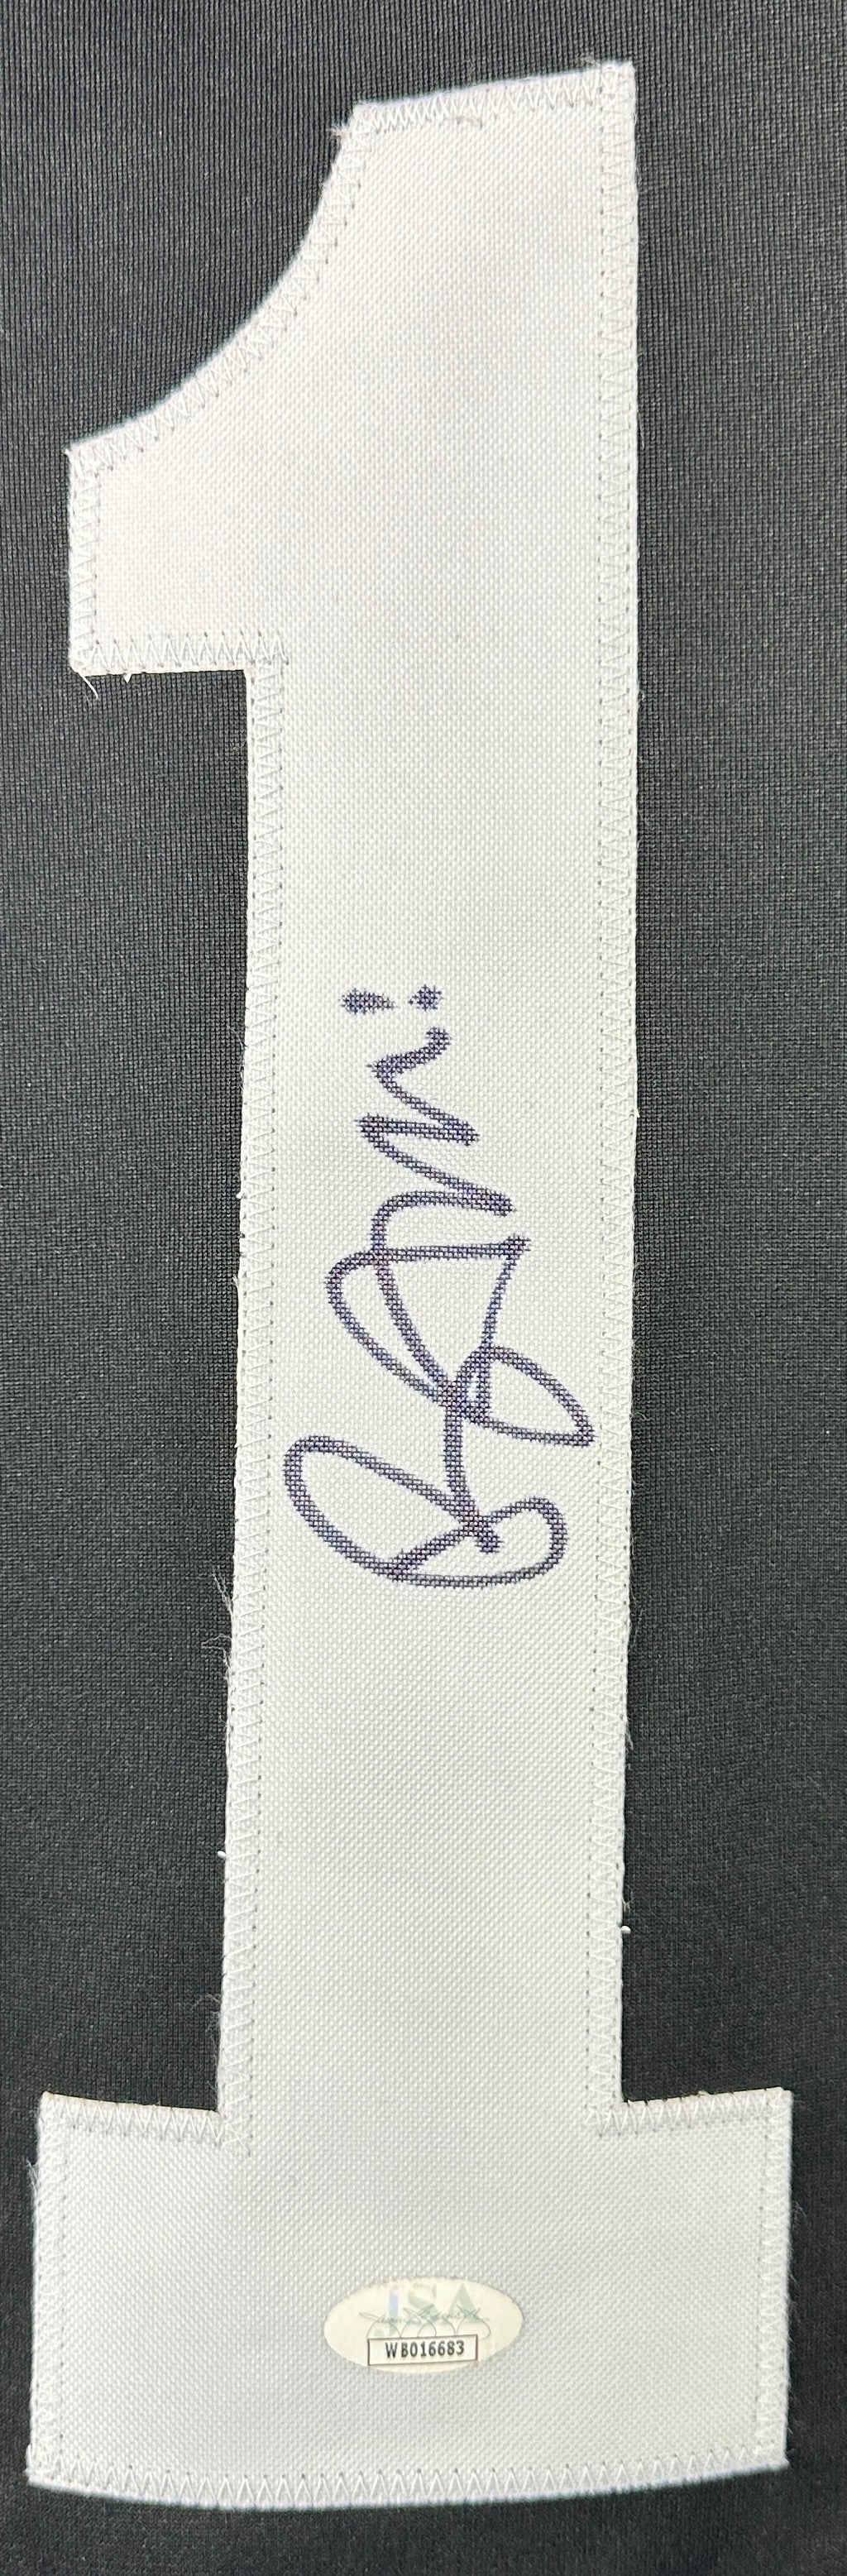 Bam Margera autographed signed jersey JSA COA Jackass